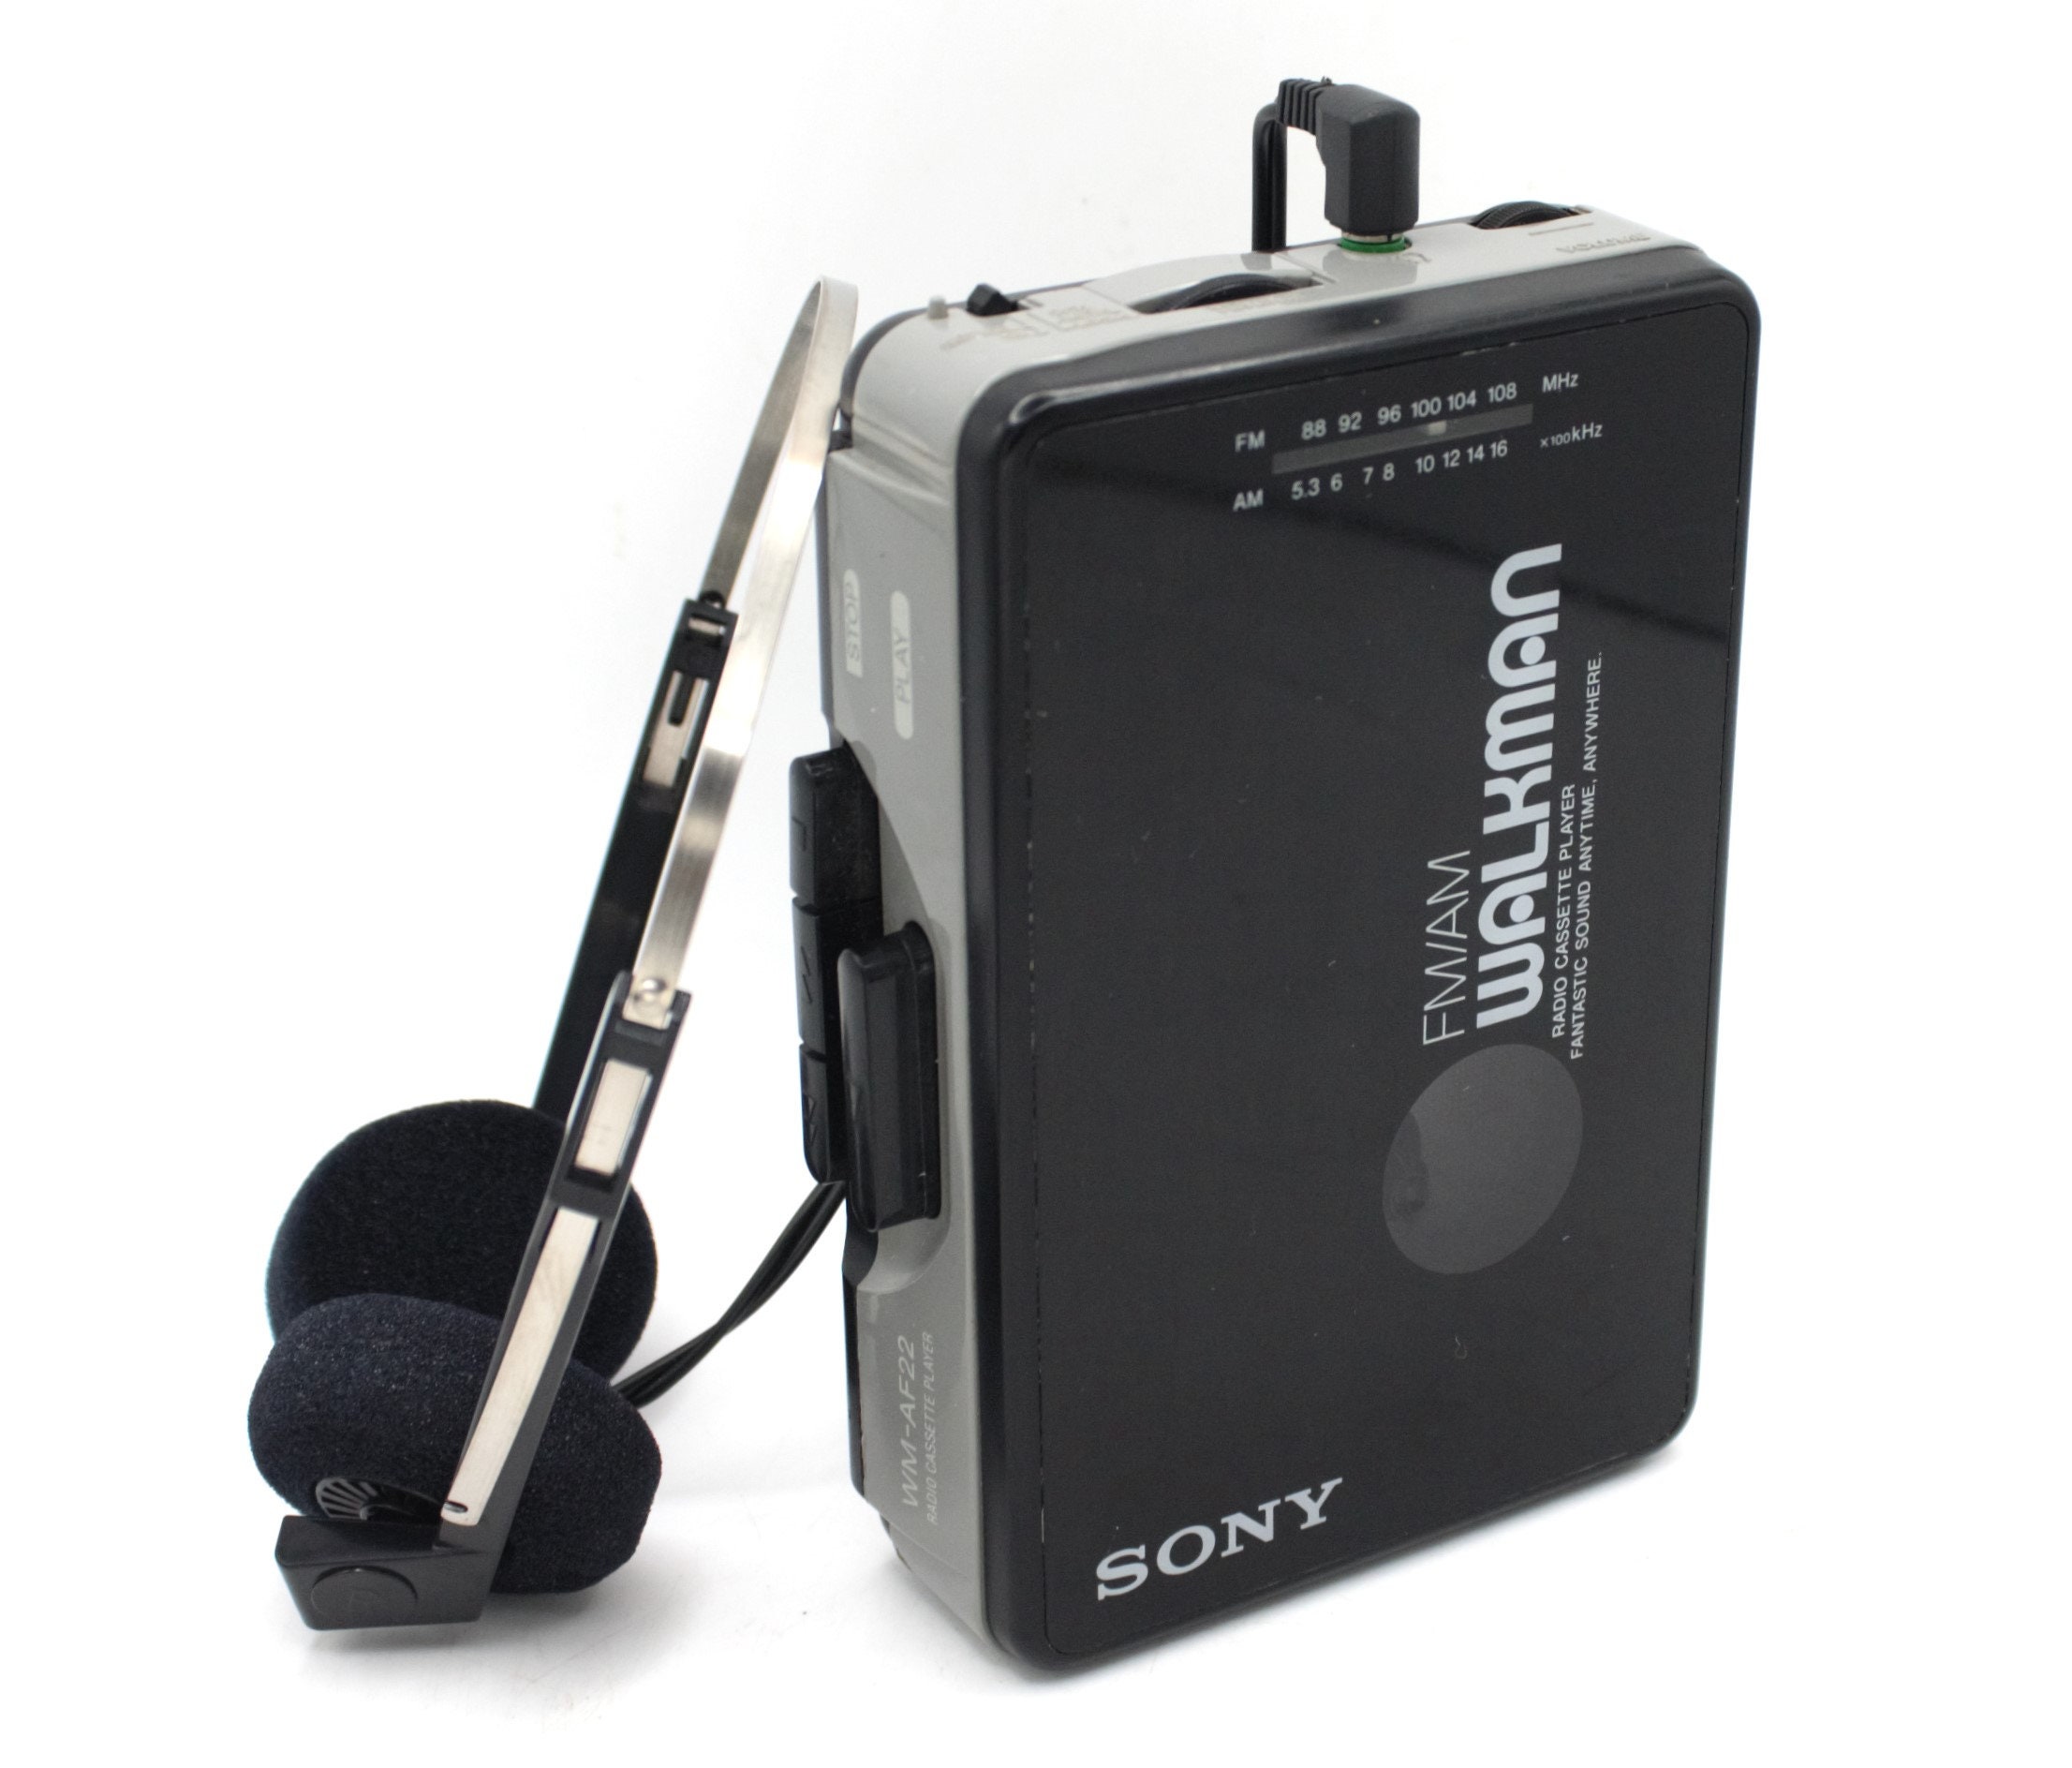 Bluetooth Transmitter Walkman Stereo Cassette Player with FM Radio